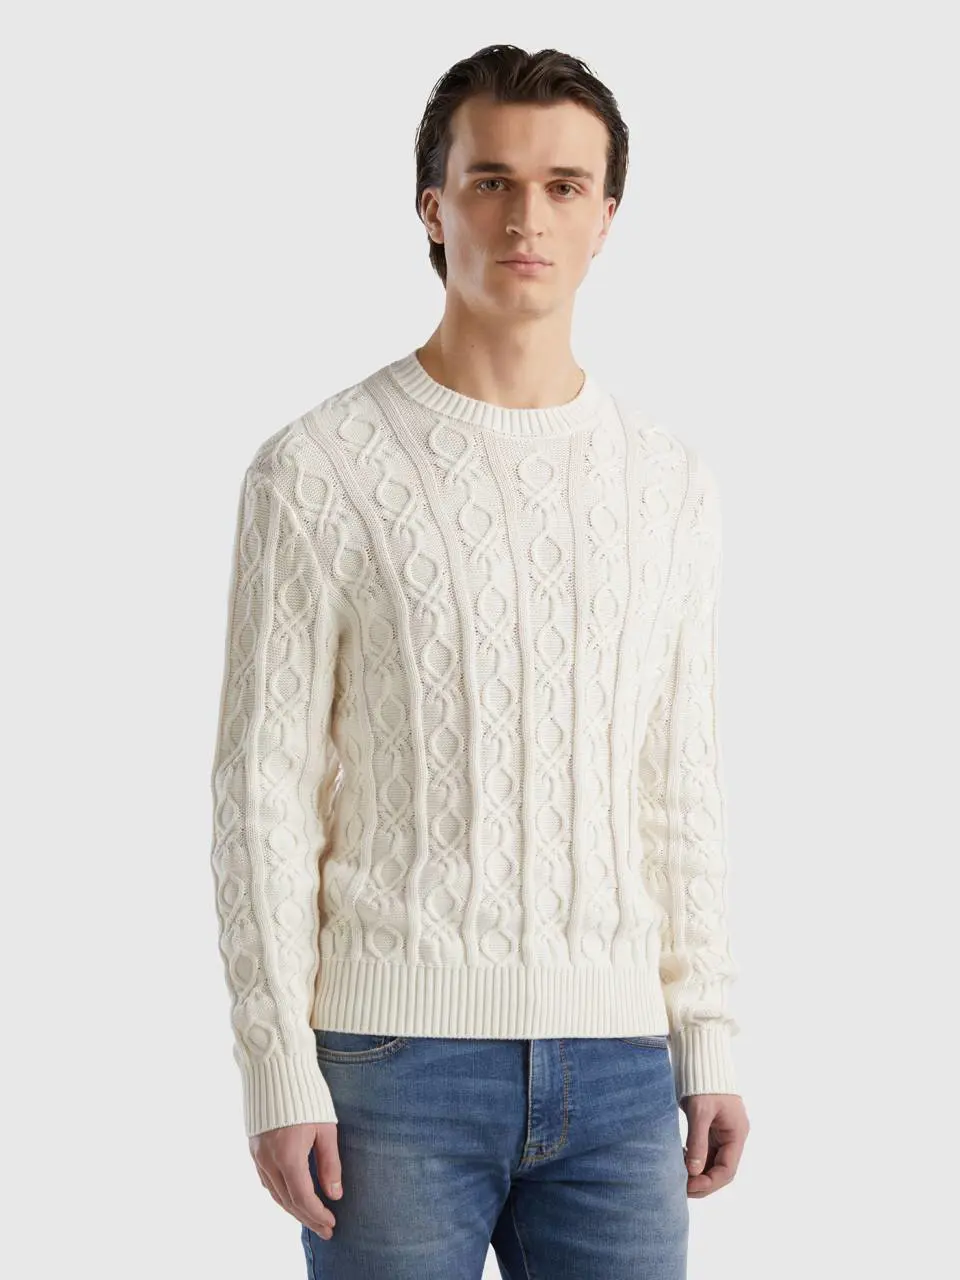 Benetton monogram sweater in 100% cotton. 1